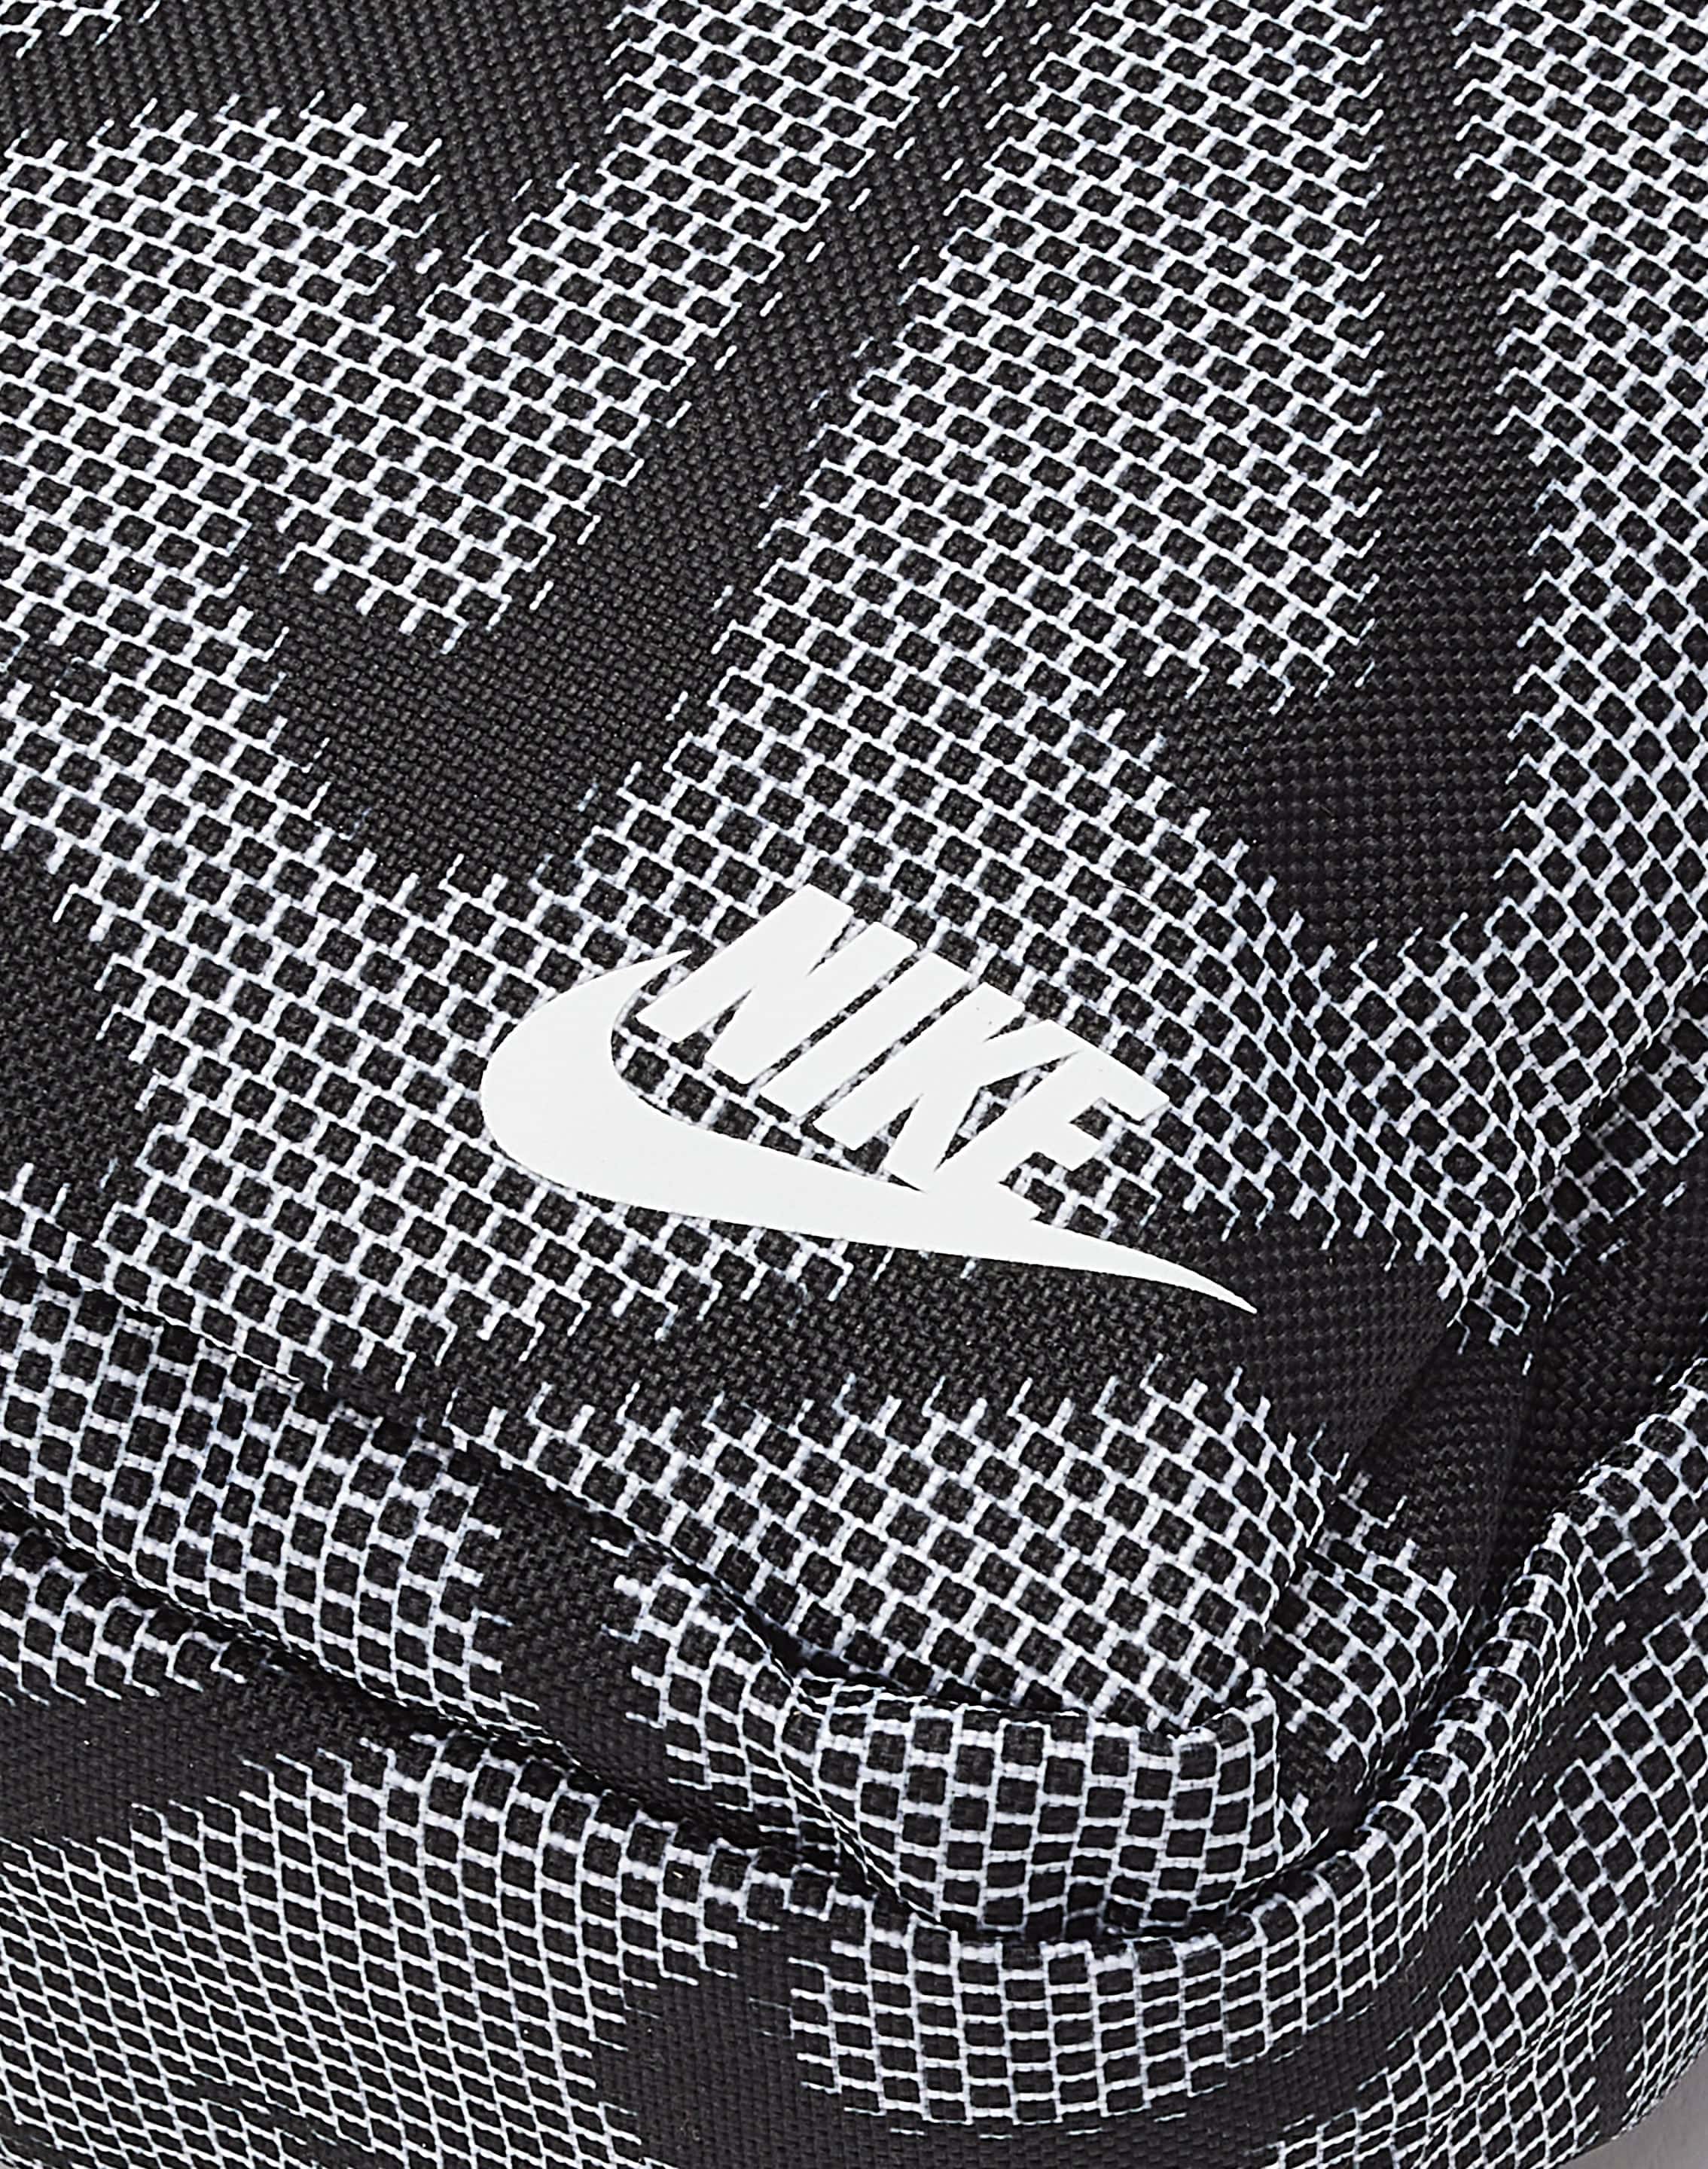 Shop Nike Heritage Crossbody Bag DM2163-010 black